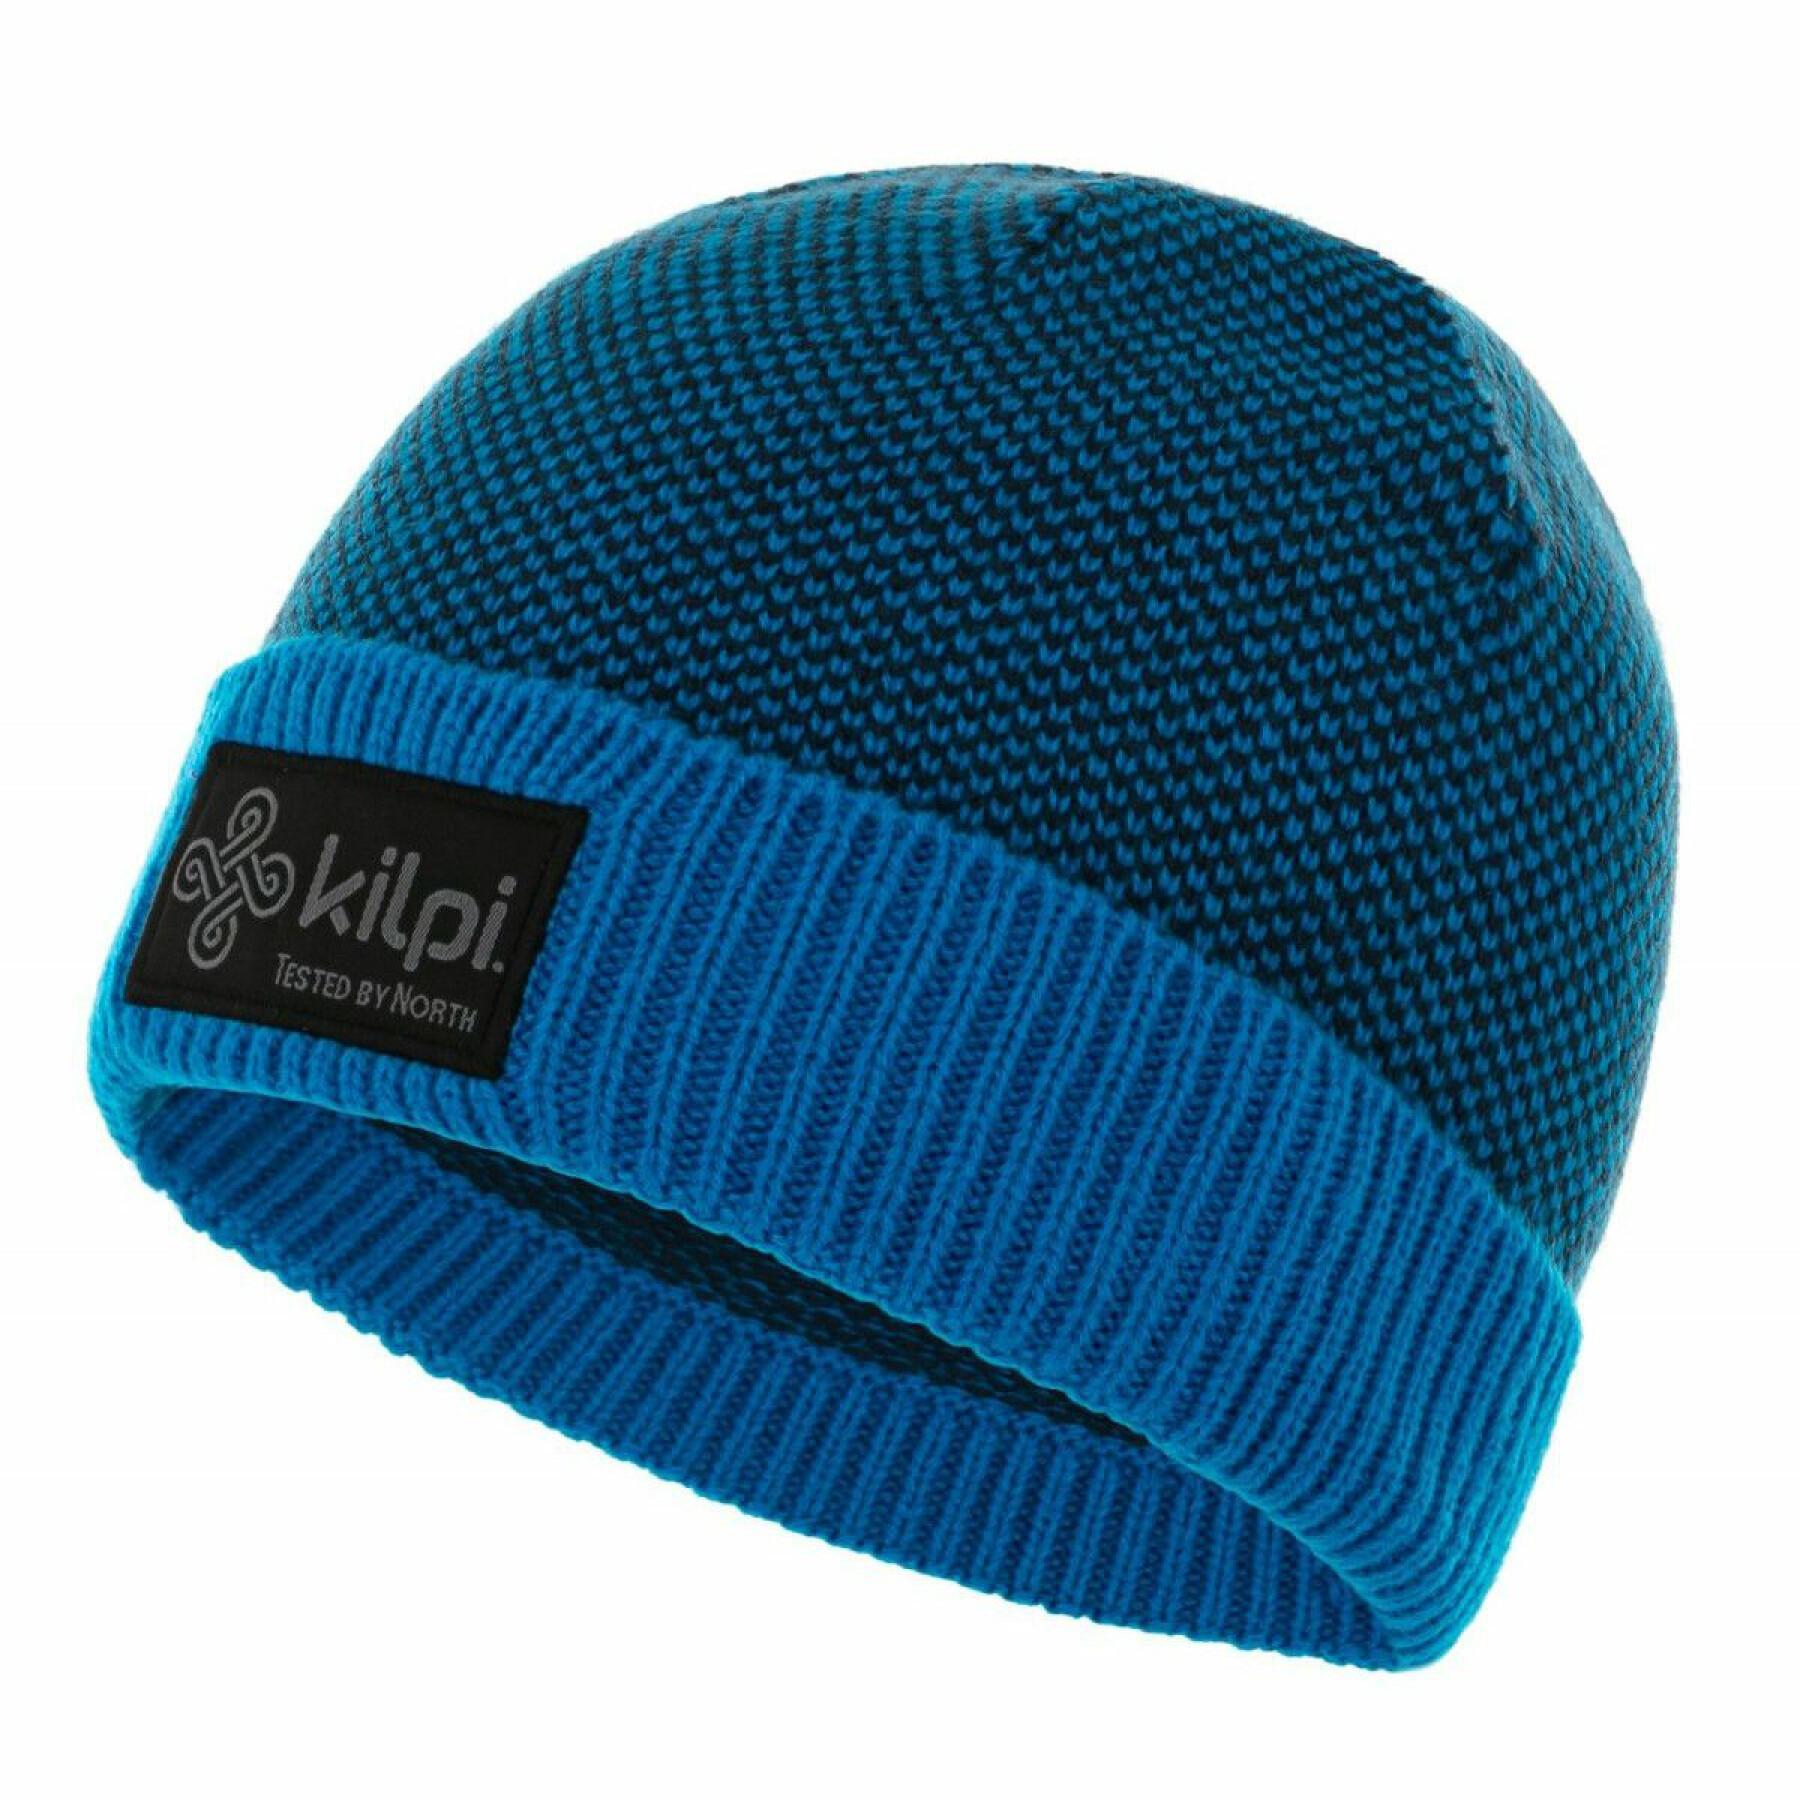 Children's hat Kilpi Barn